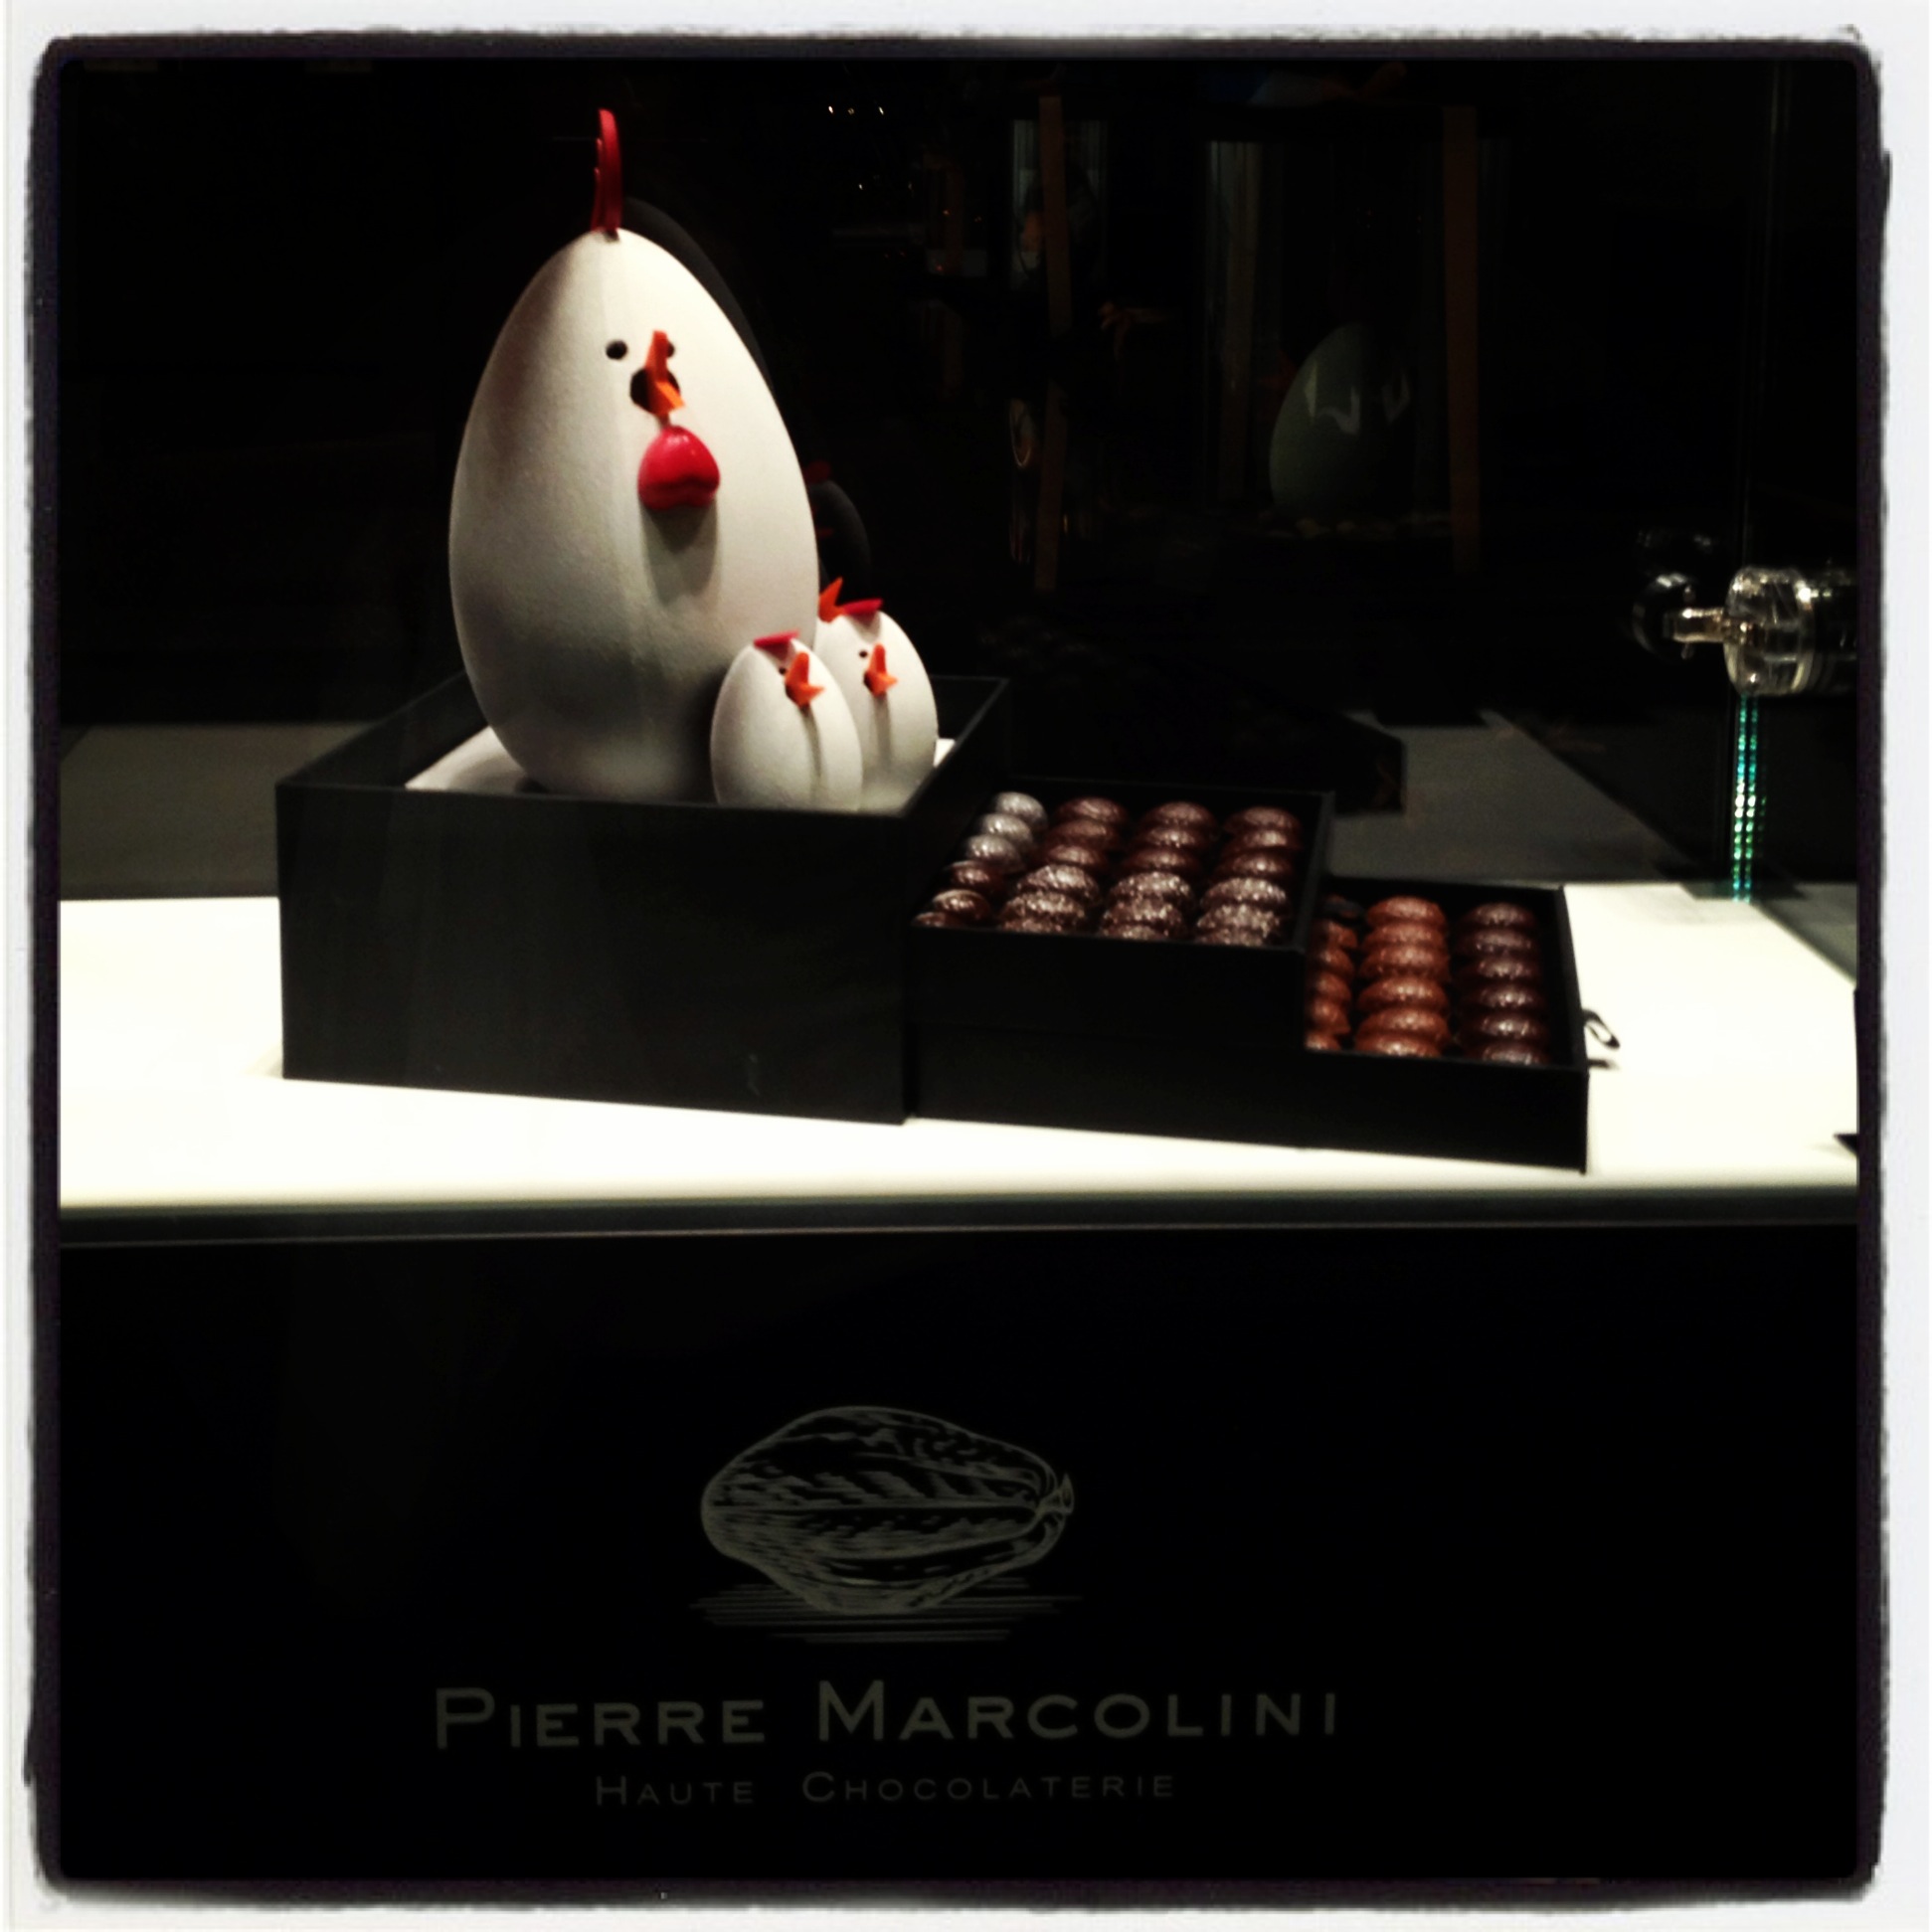 Chocolate hen and chicks at Pierre Marcolini in Monaco